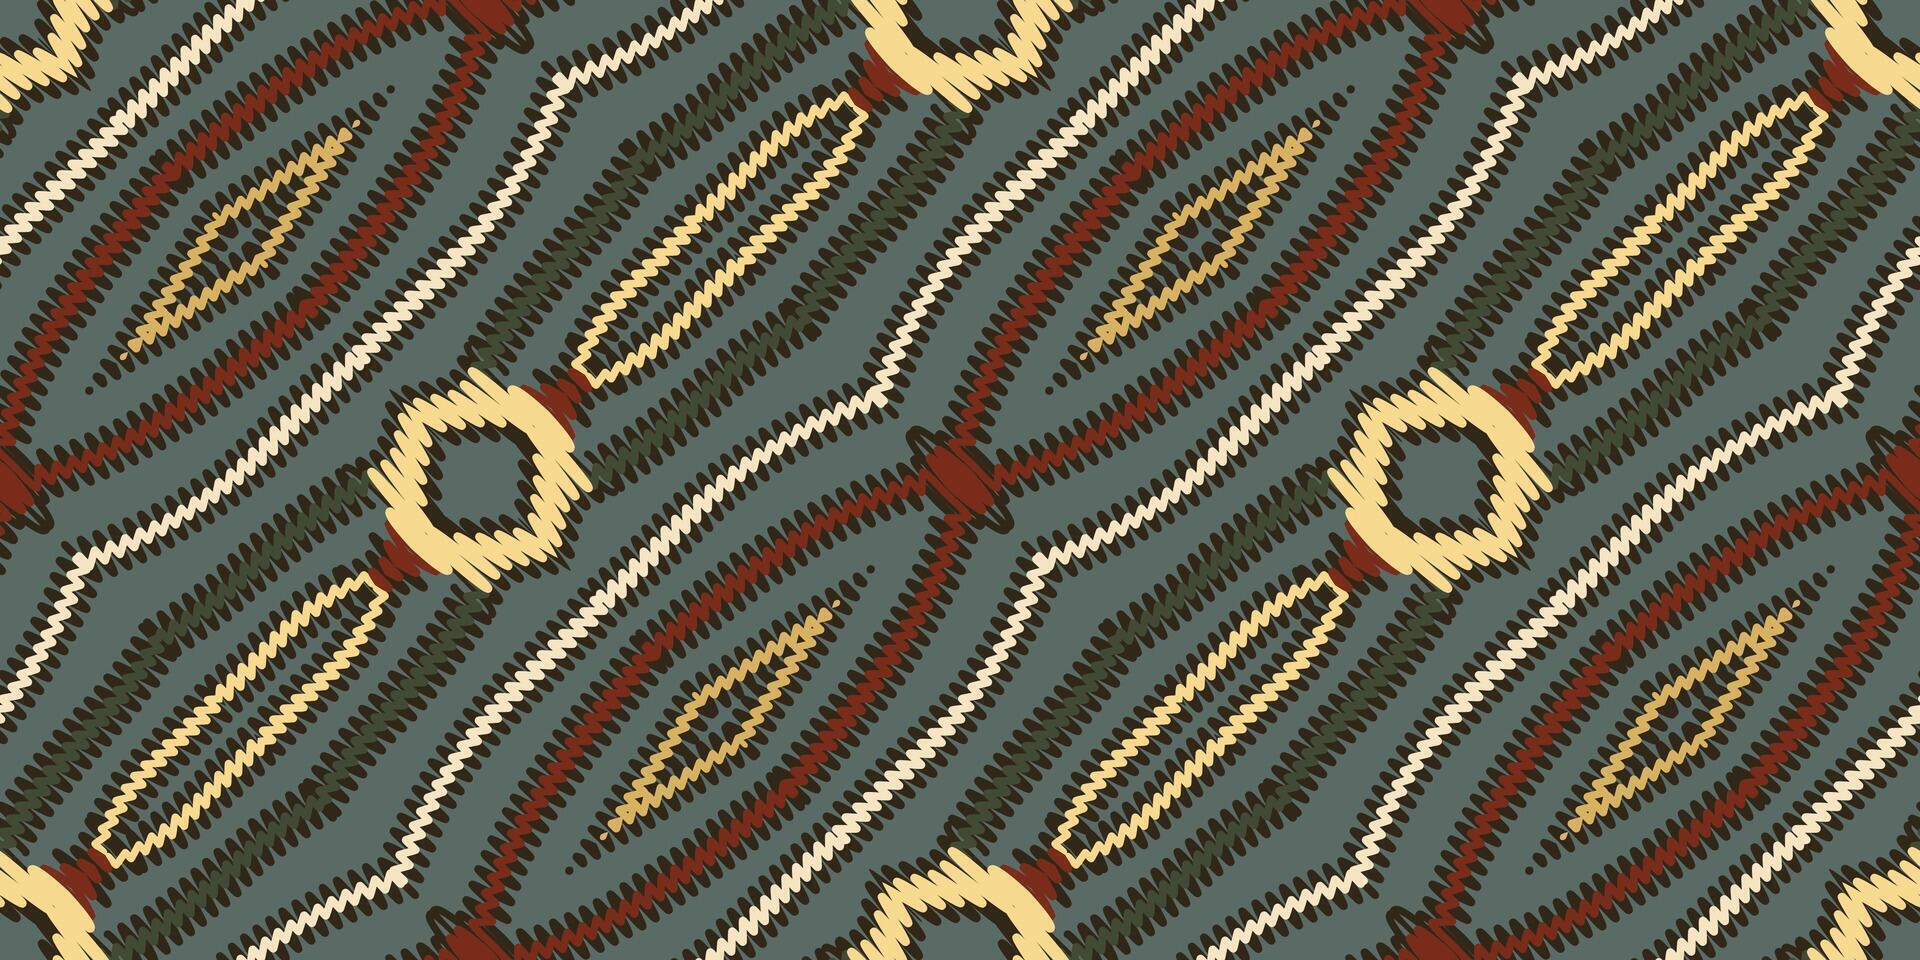 Corbata colorante modelo sin costura australiano aborigen modelo motivo bordado, ikat bordado vector diseño para impresión vyshyvanka mantel individual edredón pareo de malasia pareo de malasia playa kurtis indio motivos